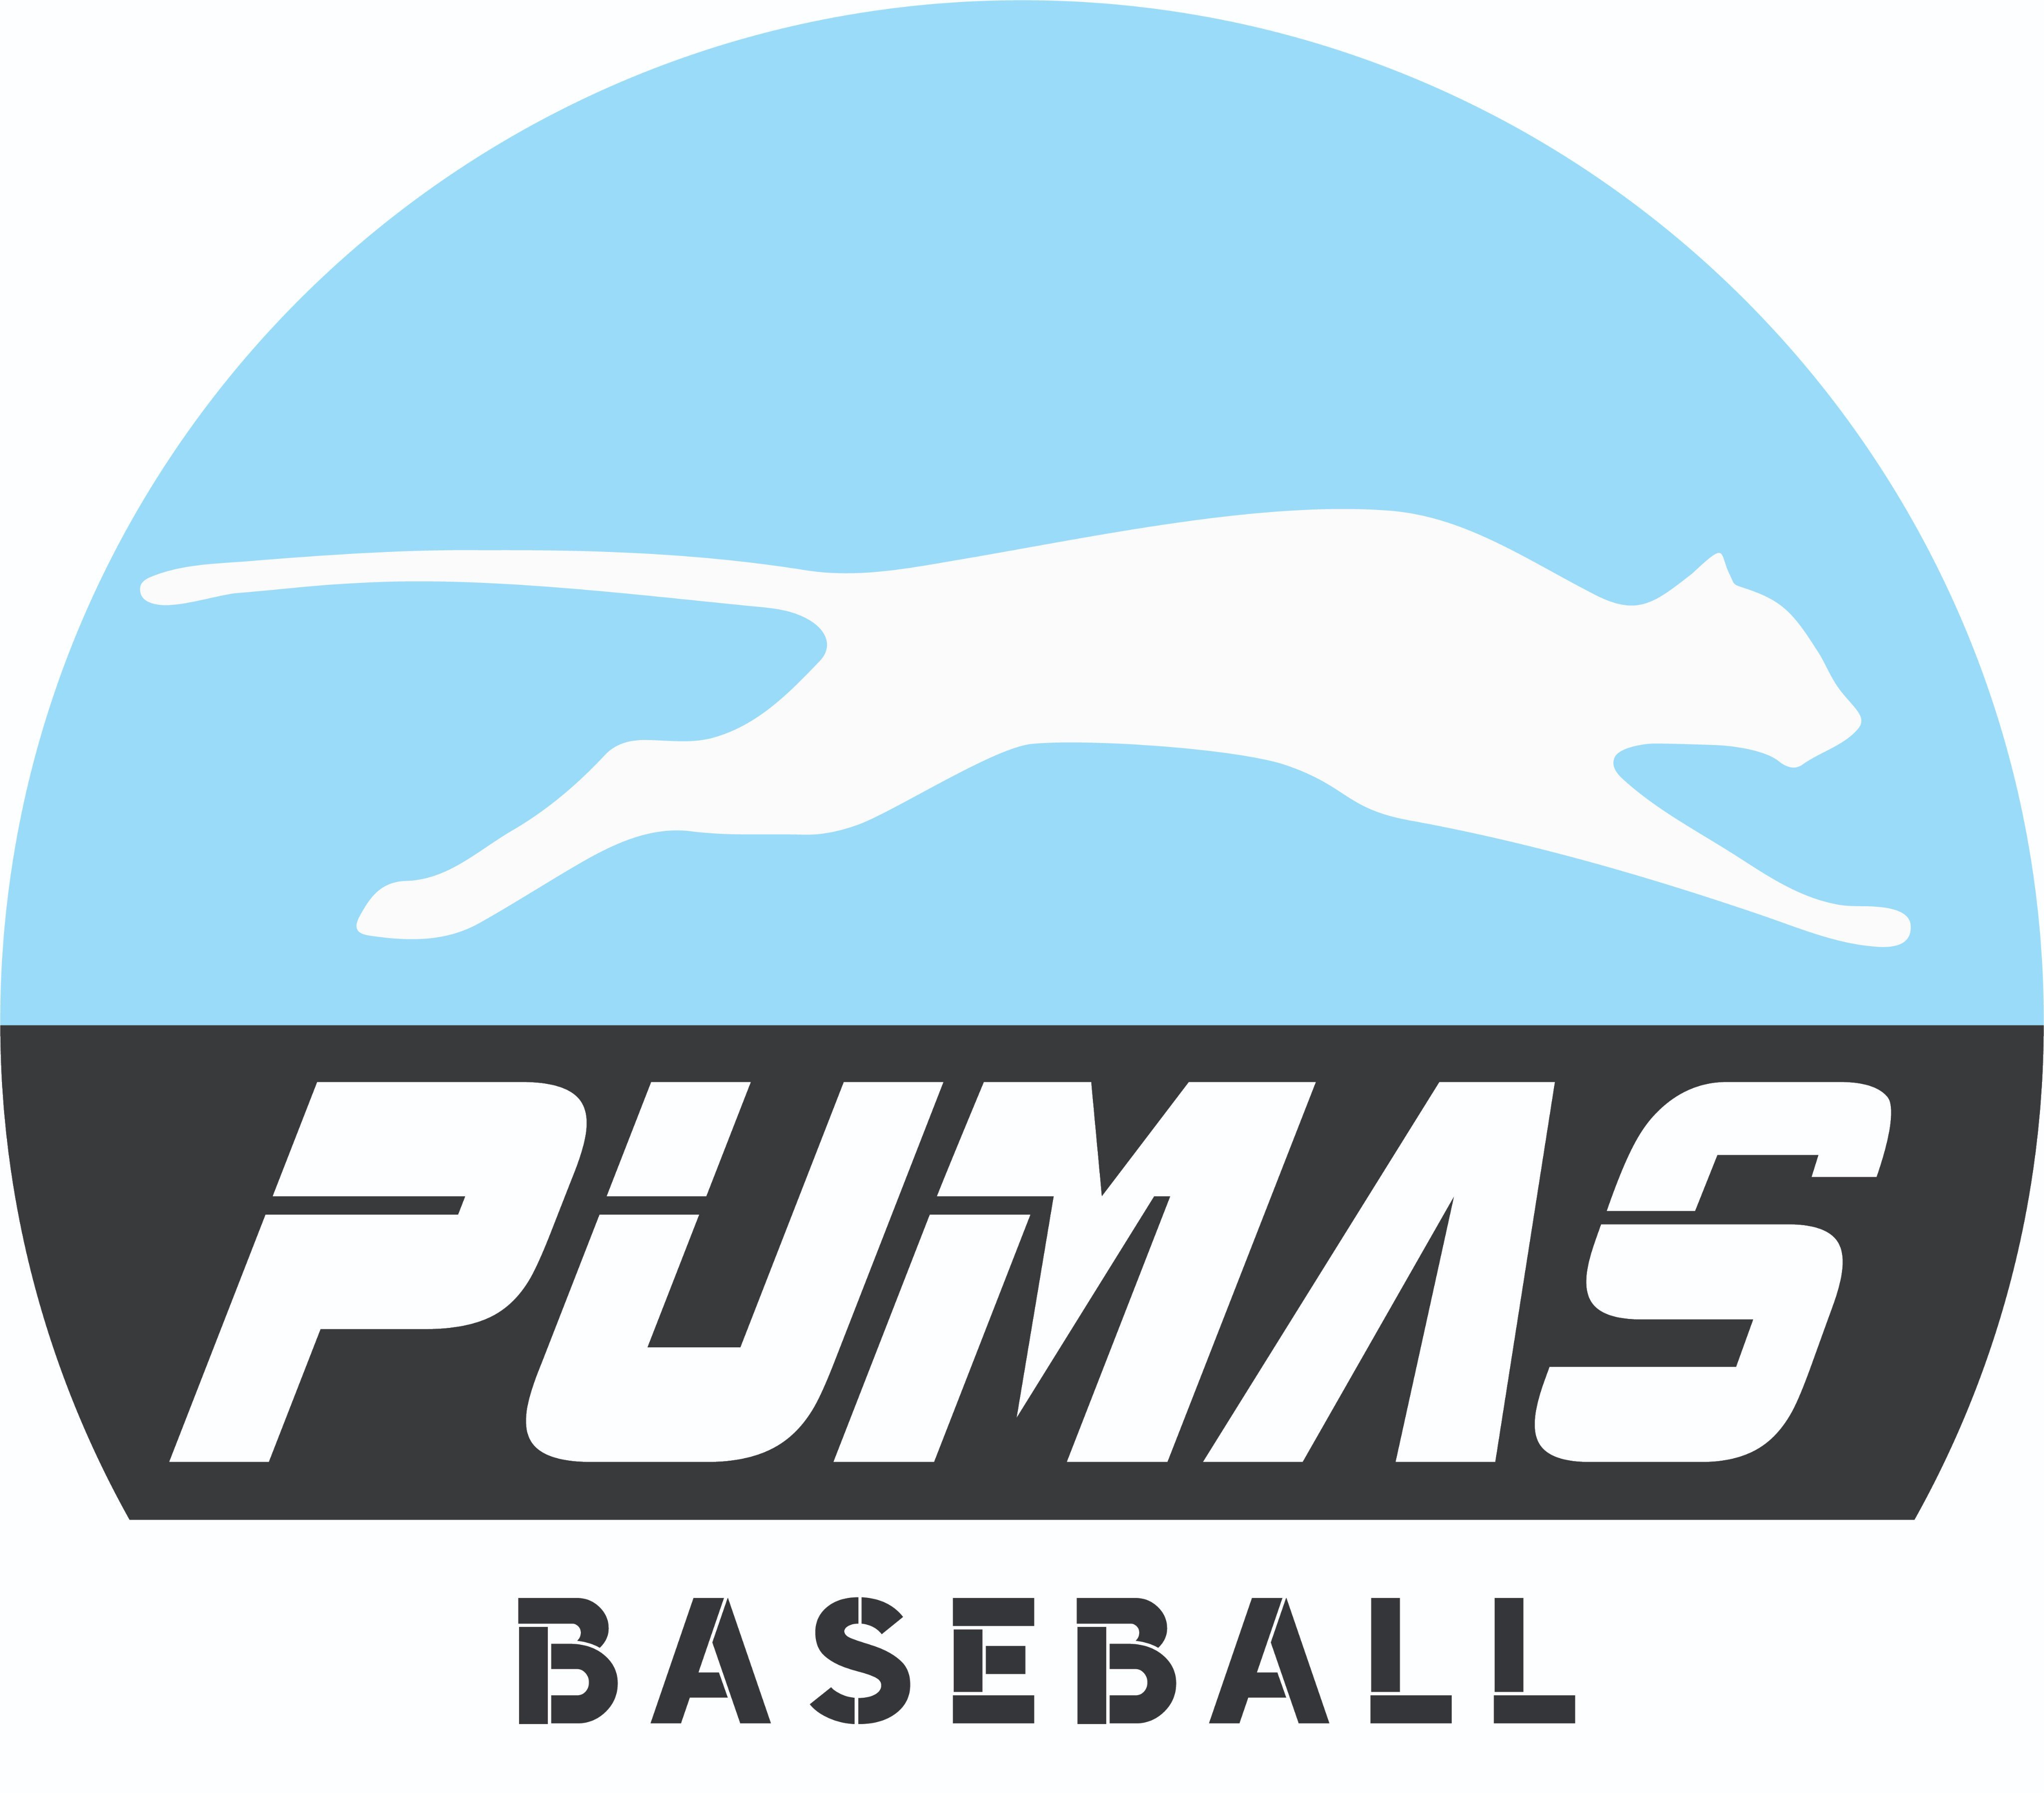 Mid-Crest Pumas Semi-Pro Baseball 